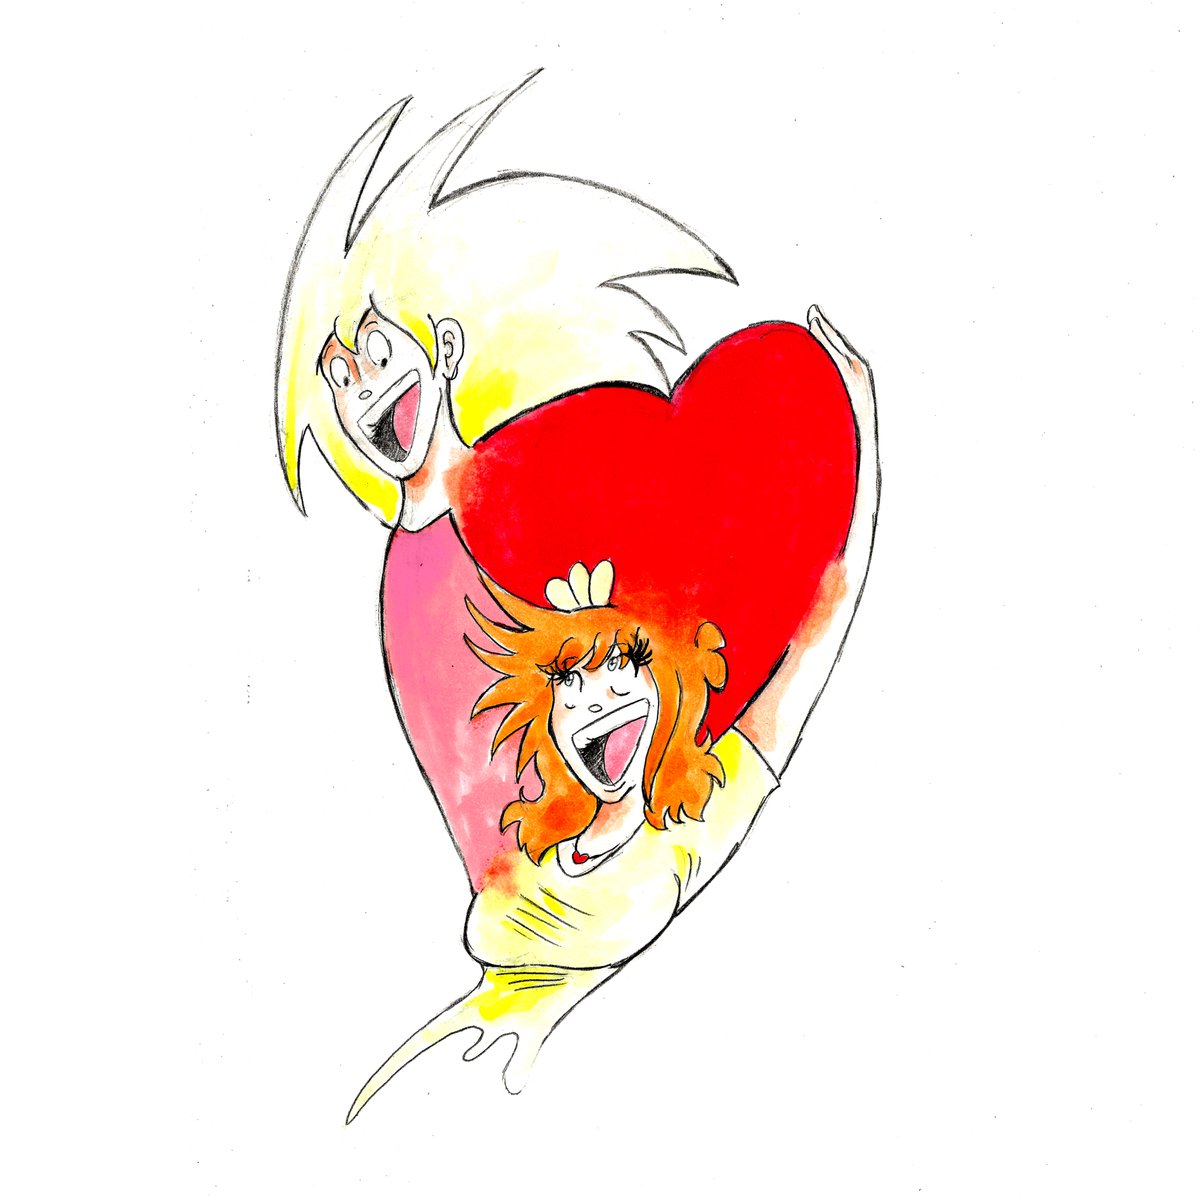 Alex and Sandy

#everydayfumetto #fumetto #fumettoitaliano #fumettoindipendente #fumettolandia #fumettomanga #nonaarte #fumettopoli #vignetta #fumettostyle #alessiofermanelli #manga #illustrations #instapic #illustrazioni #characterdesign #amore #love #loving #copic